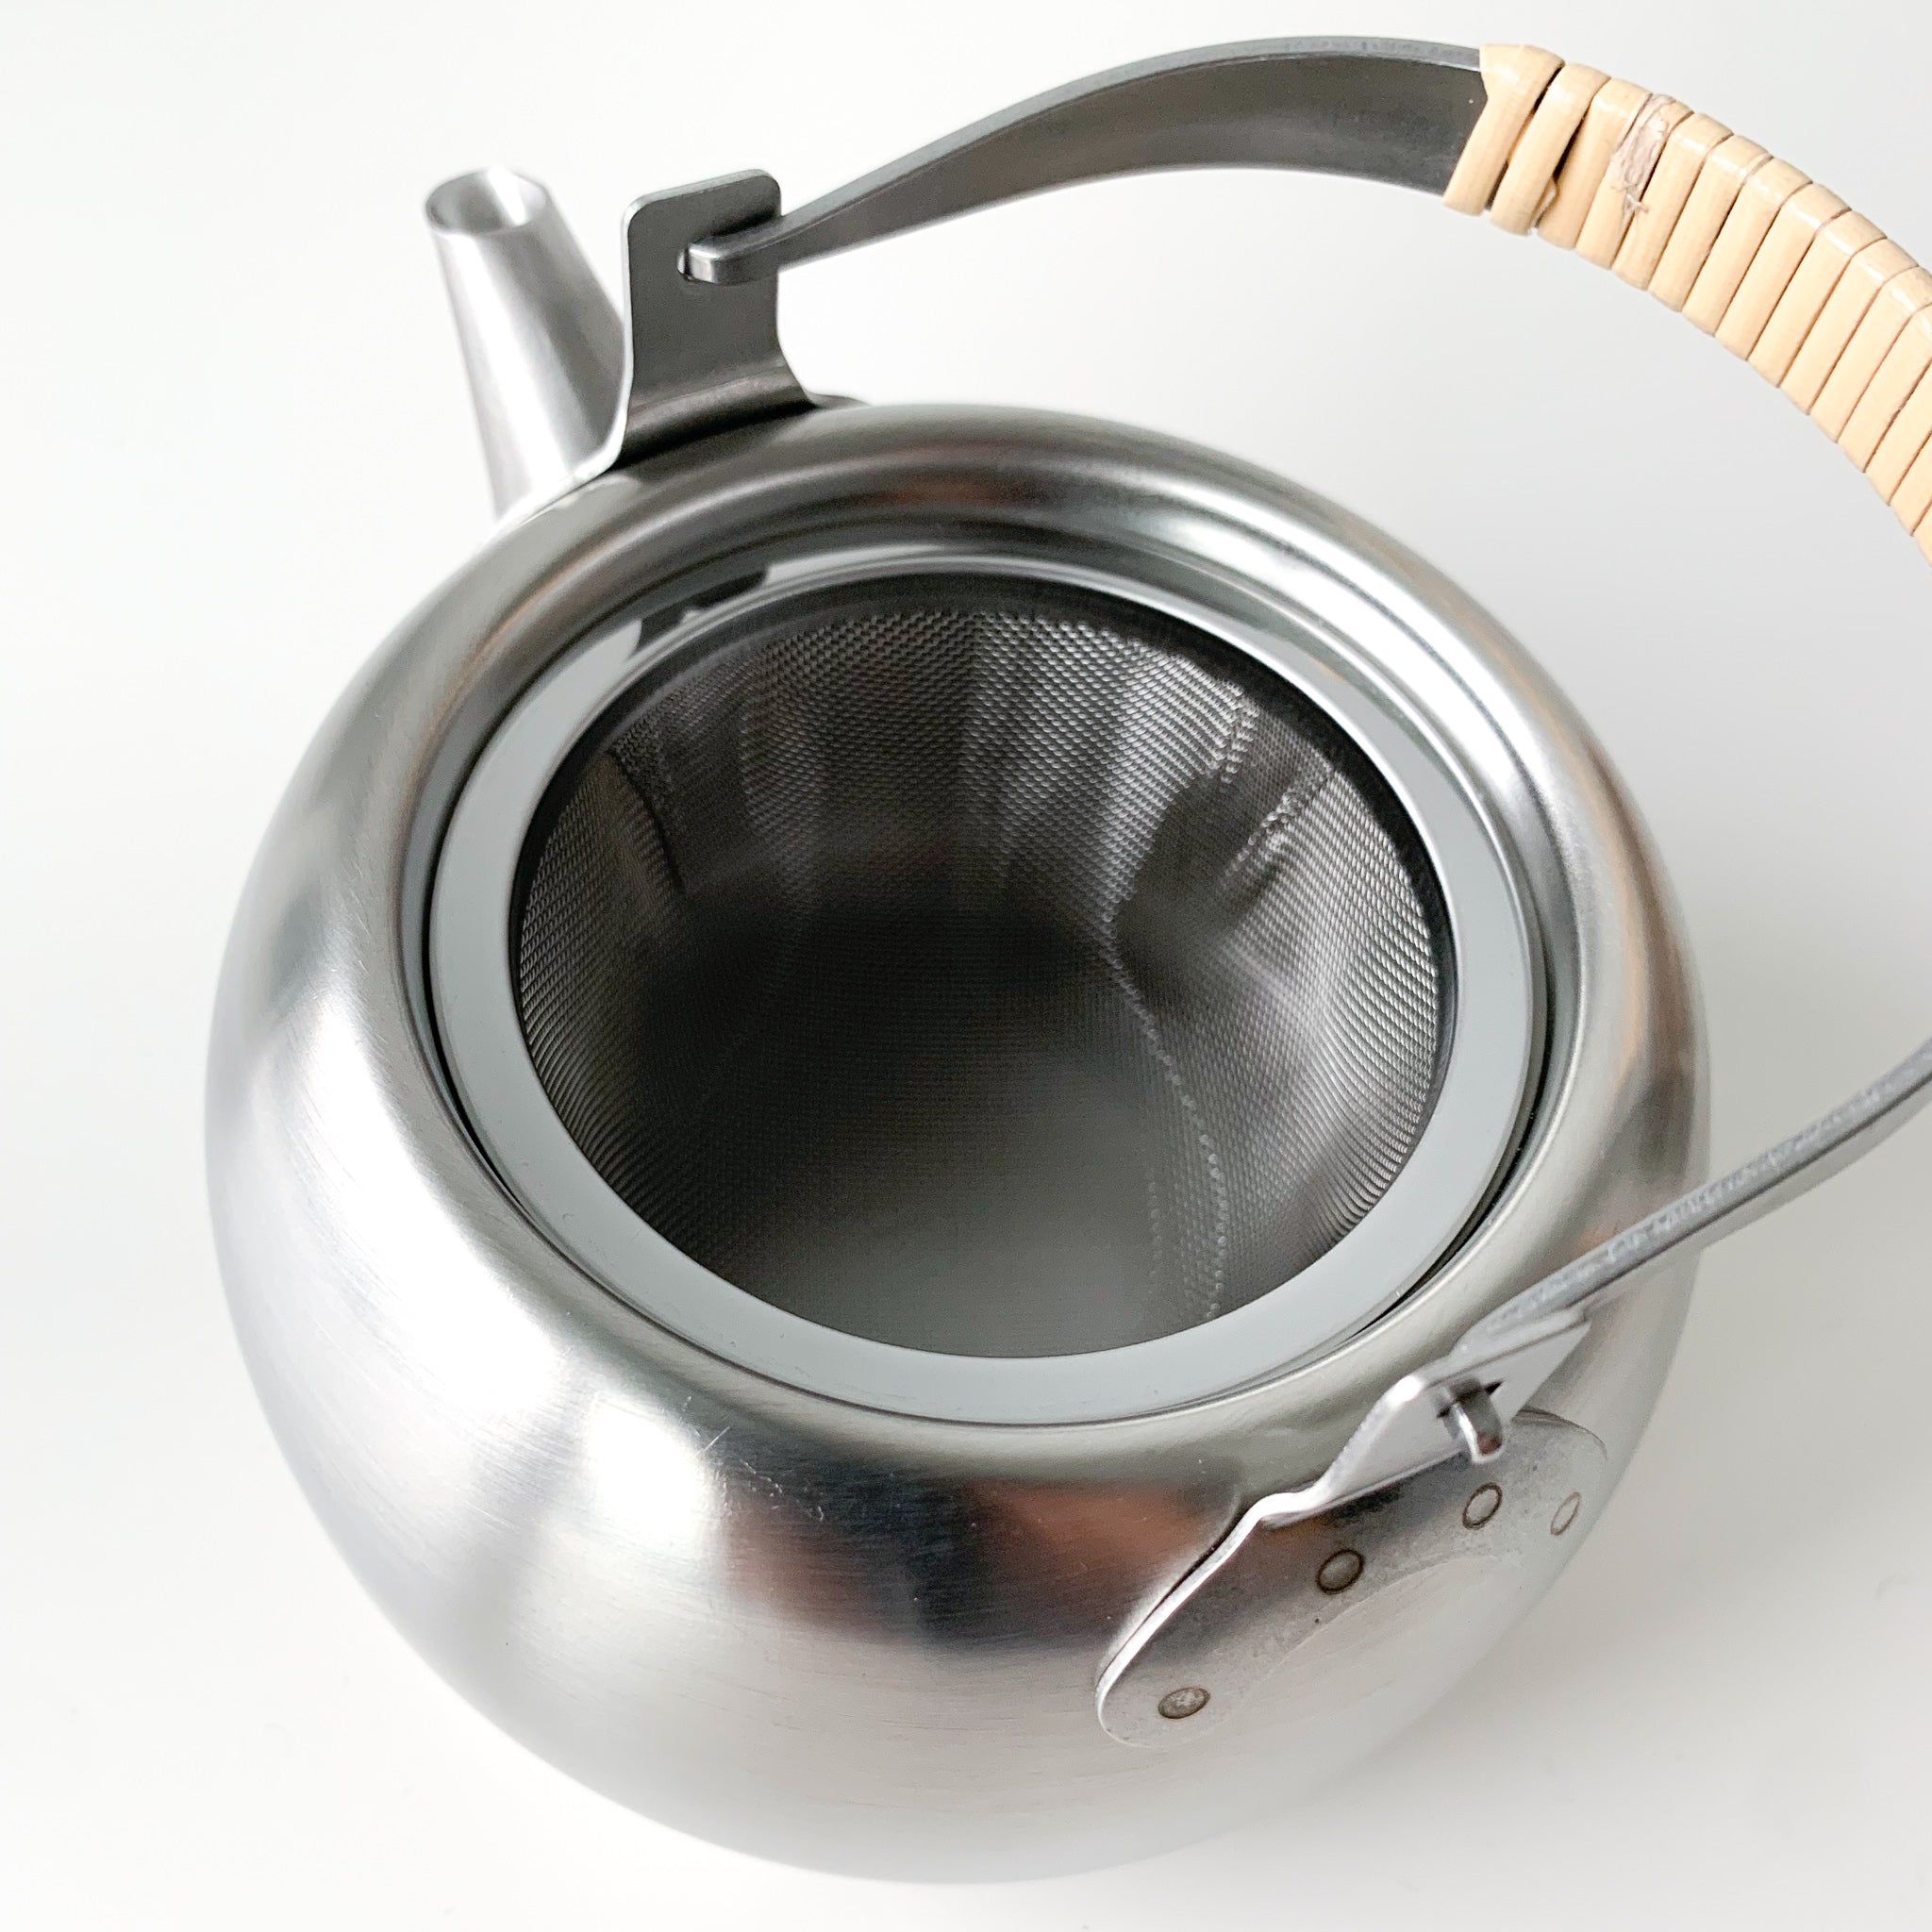 Yoshikawa Teapot Stainless Steel 500ml Tsurute Midori Made in Japan Yj2892